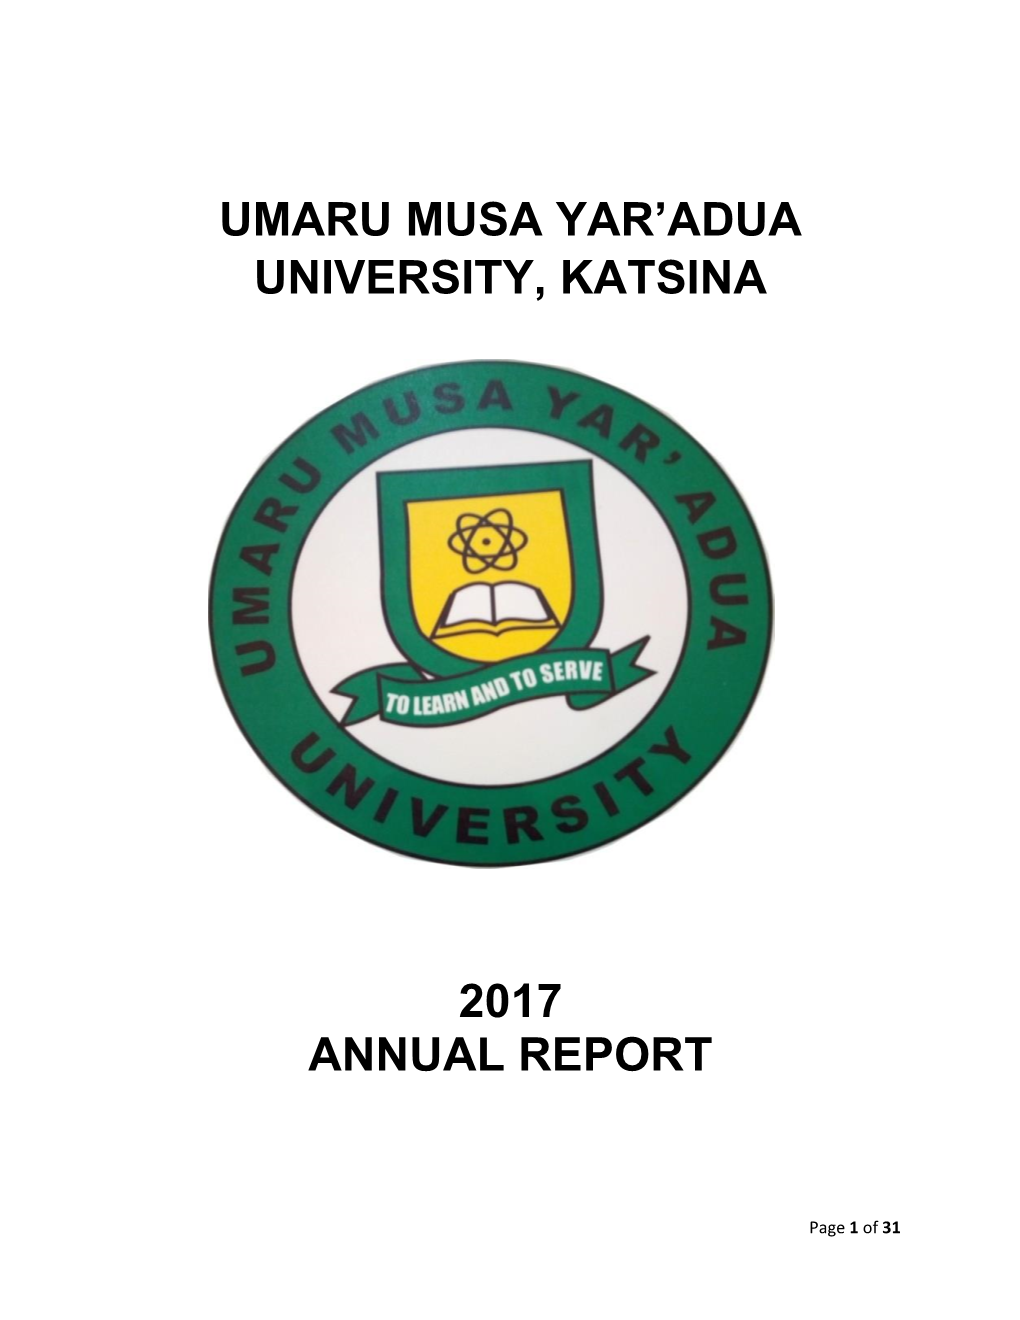 Umaru Musa Yar'adua University, Katsina 2017